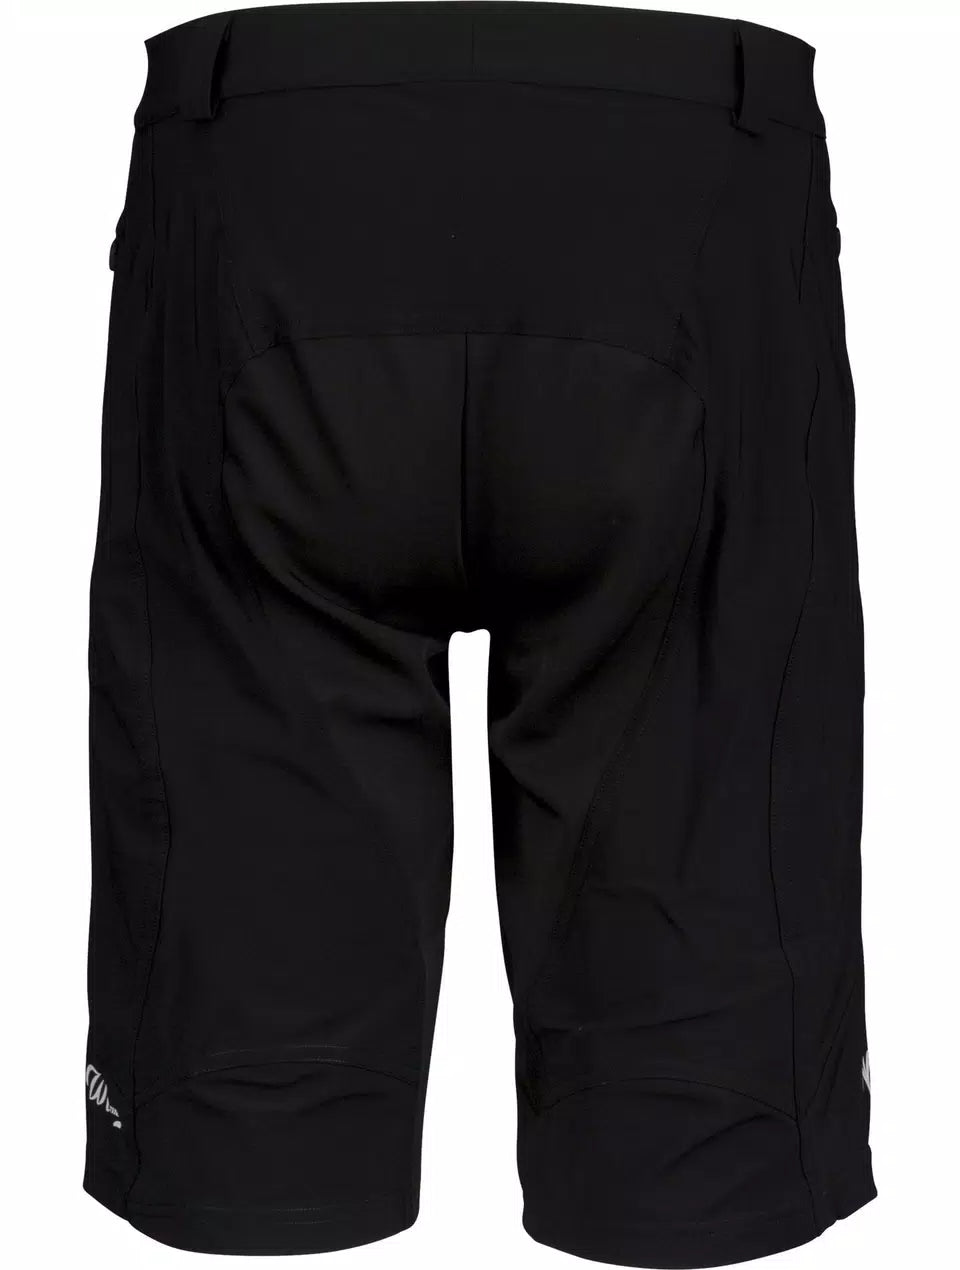 Wilier Clothing Shorts Braga Gravel - Black